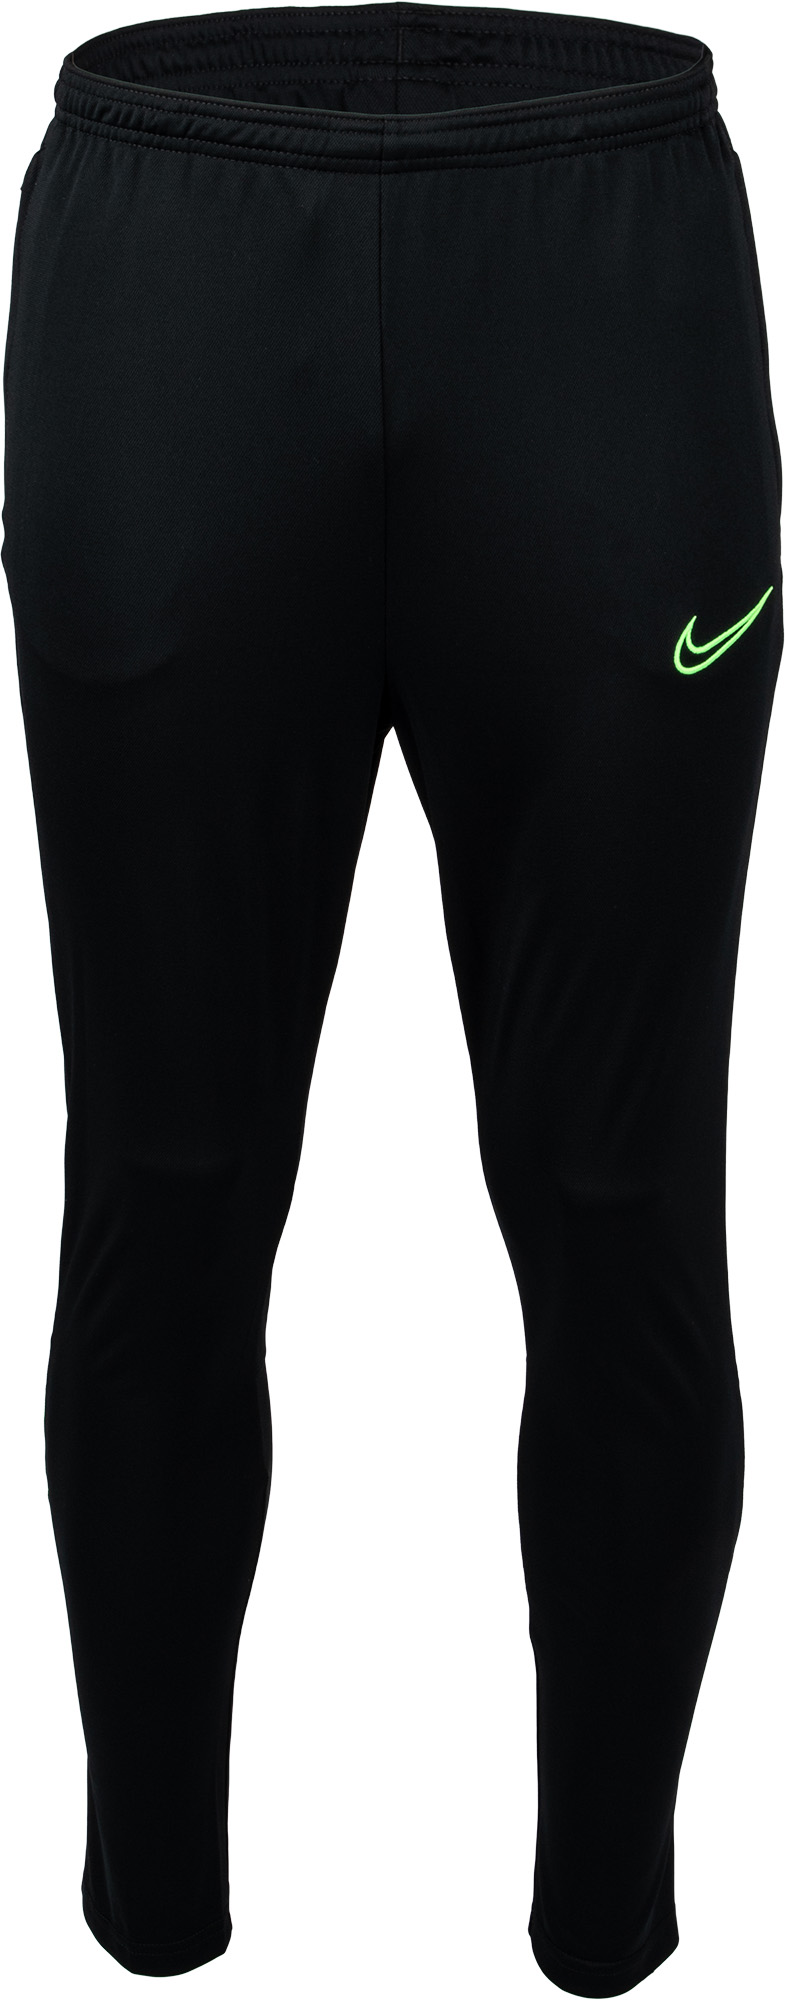 Nike ACD21 TRK SUIT K M sportisimo.com